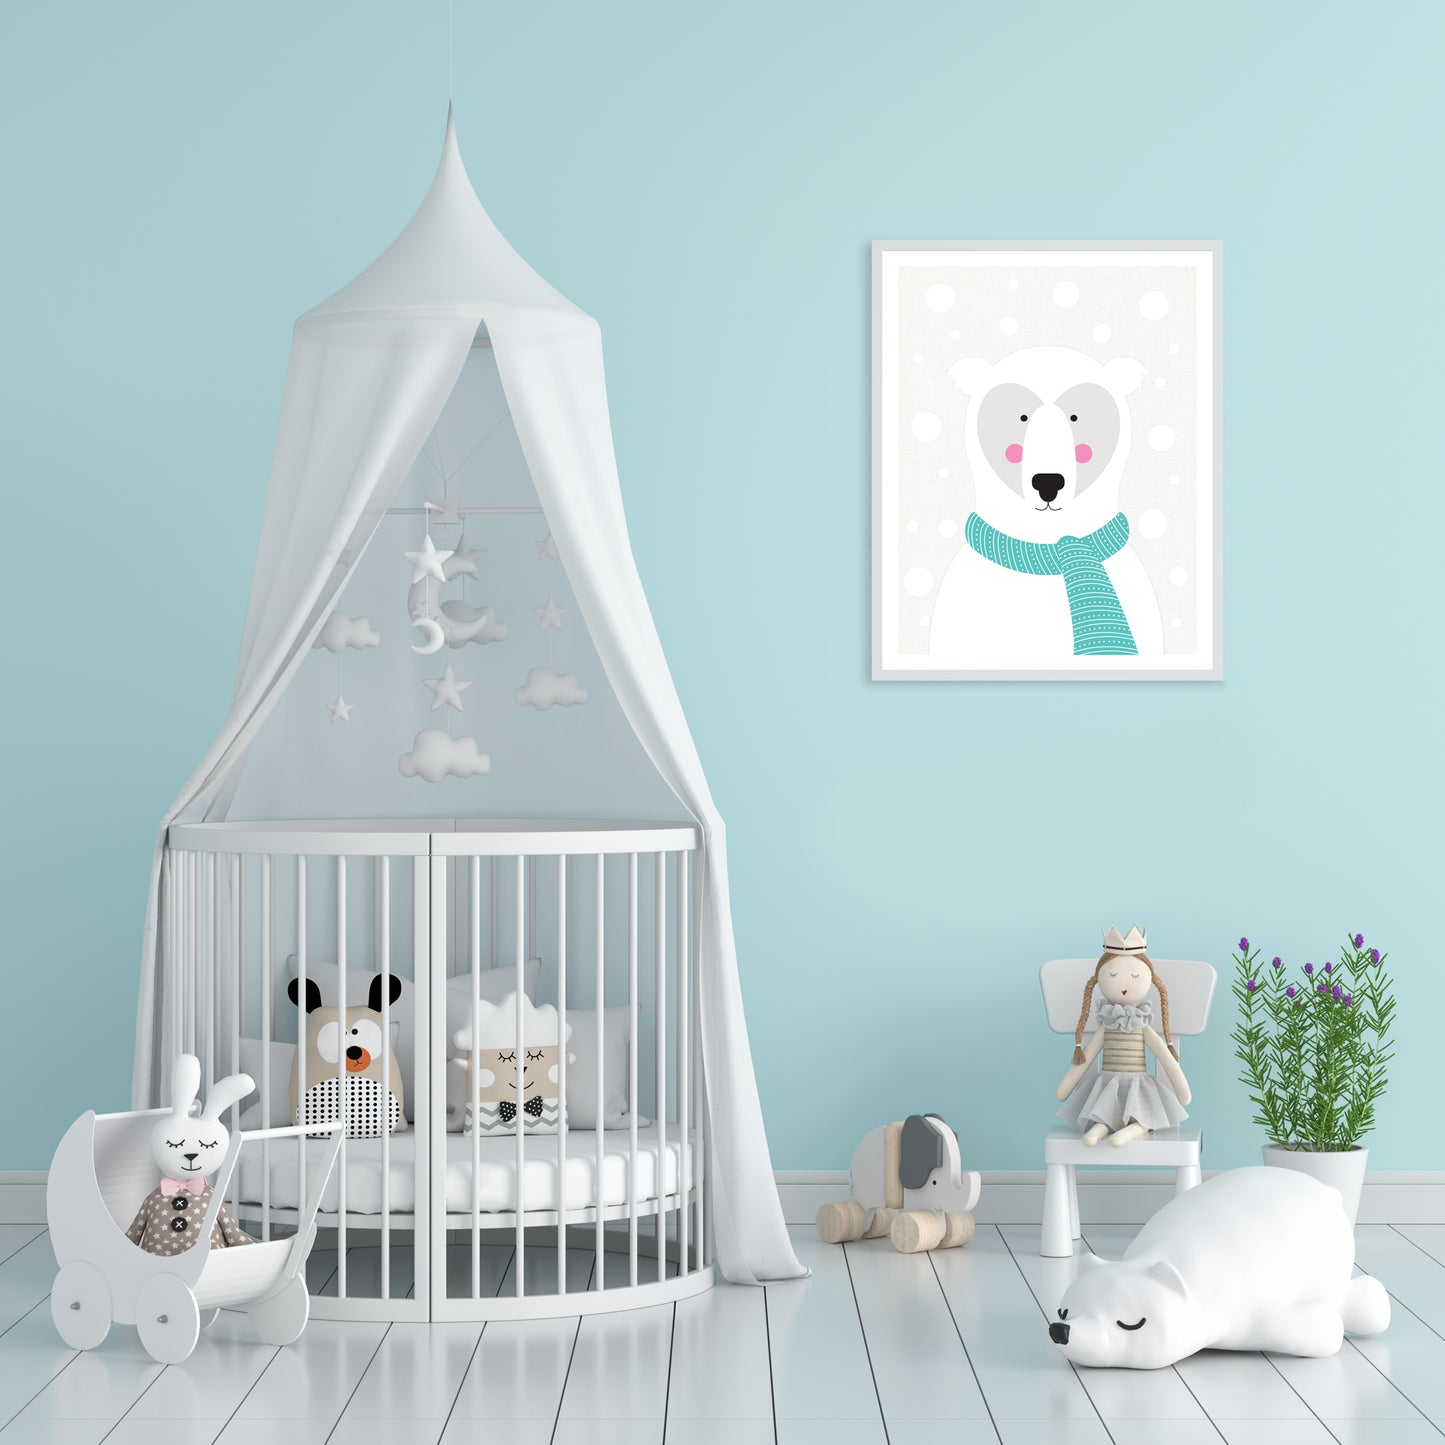 turquoise winter or arctic animal themed nursery with polar bear print